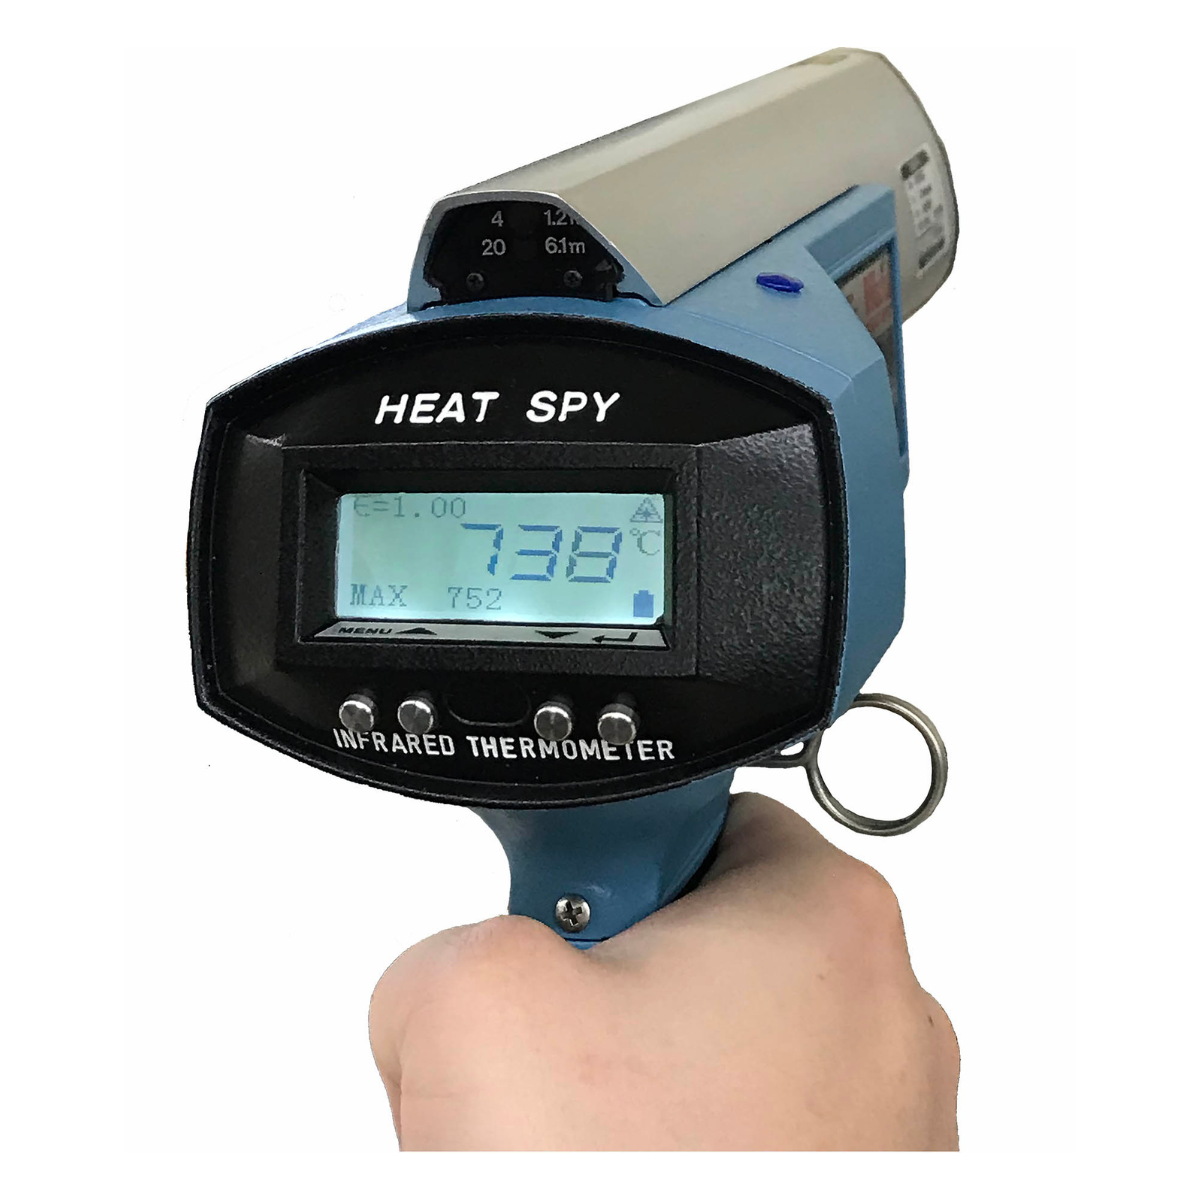 Heavy Duty Thermometer - Hummert International